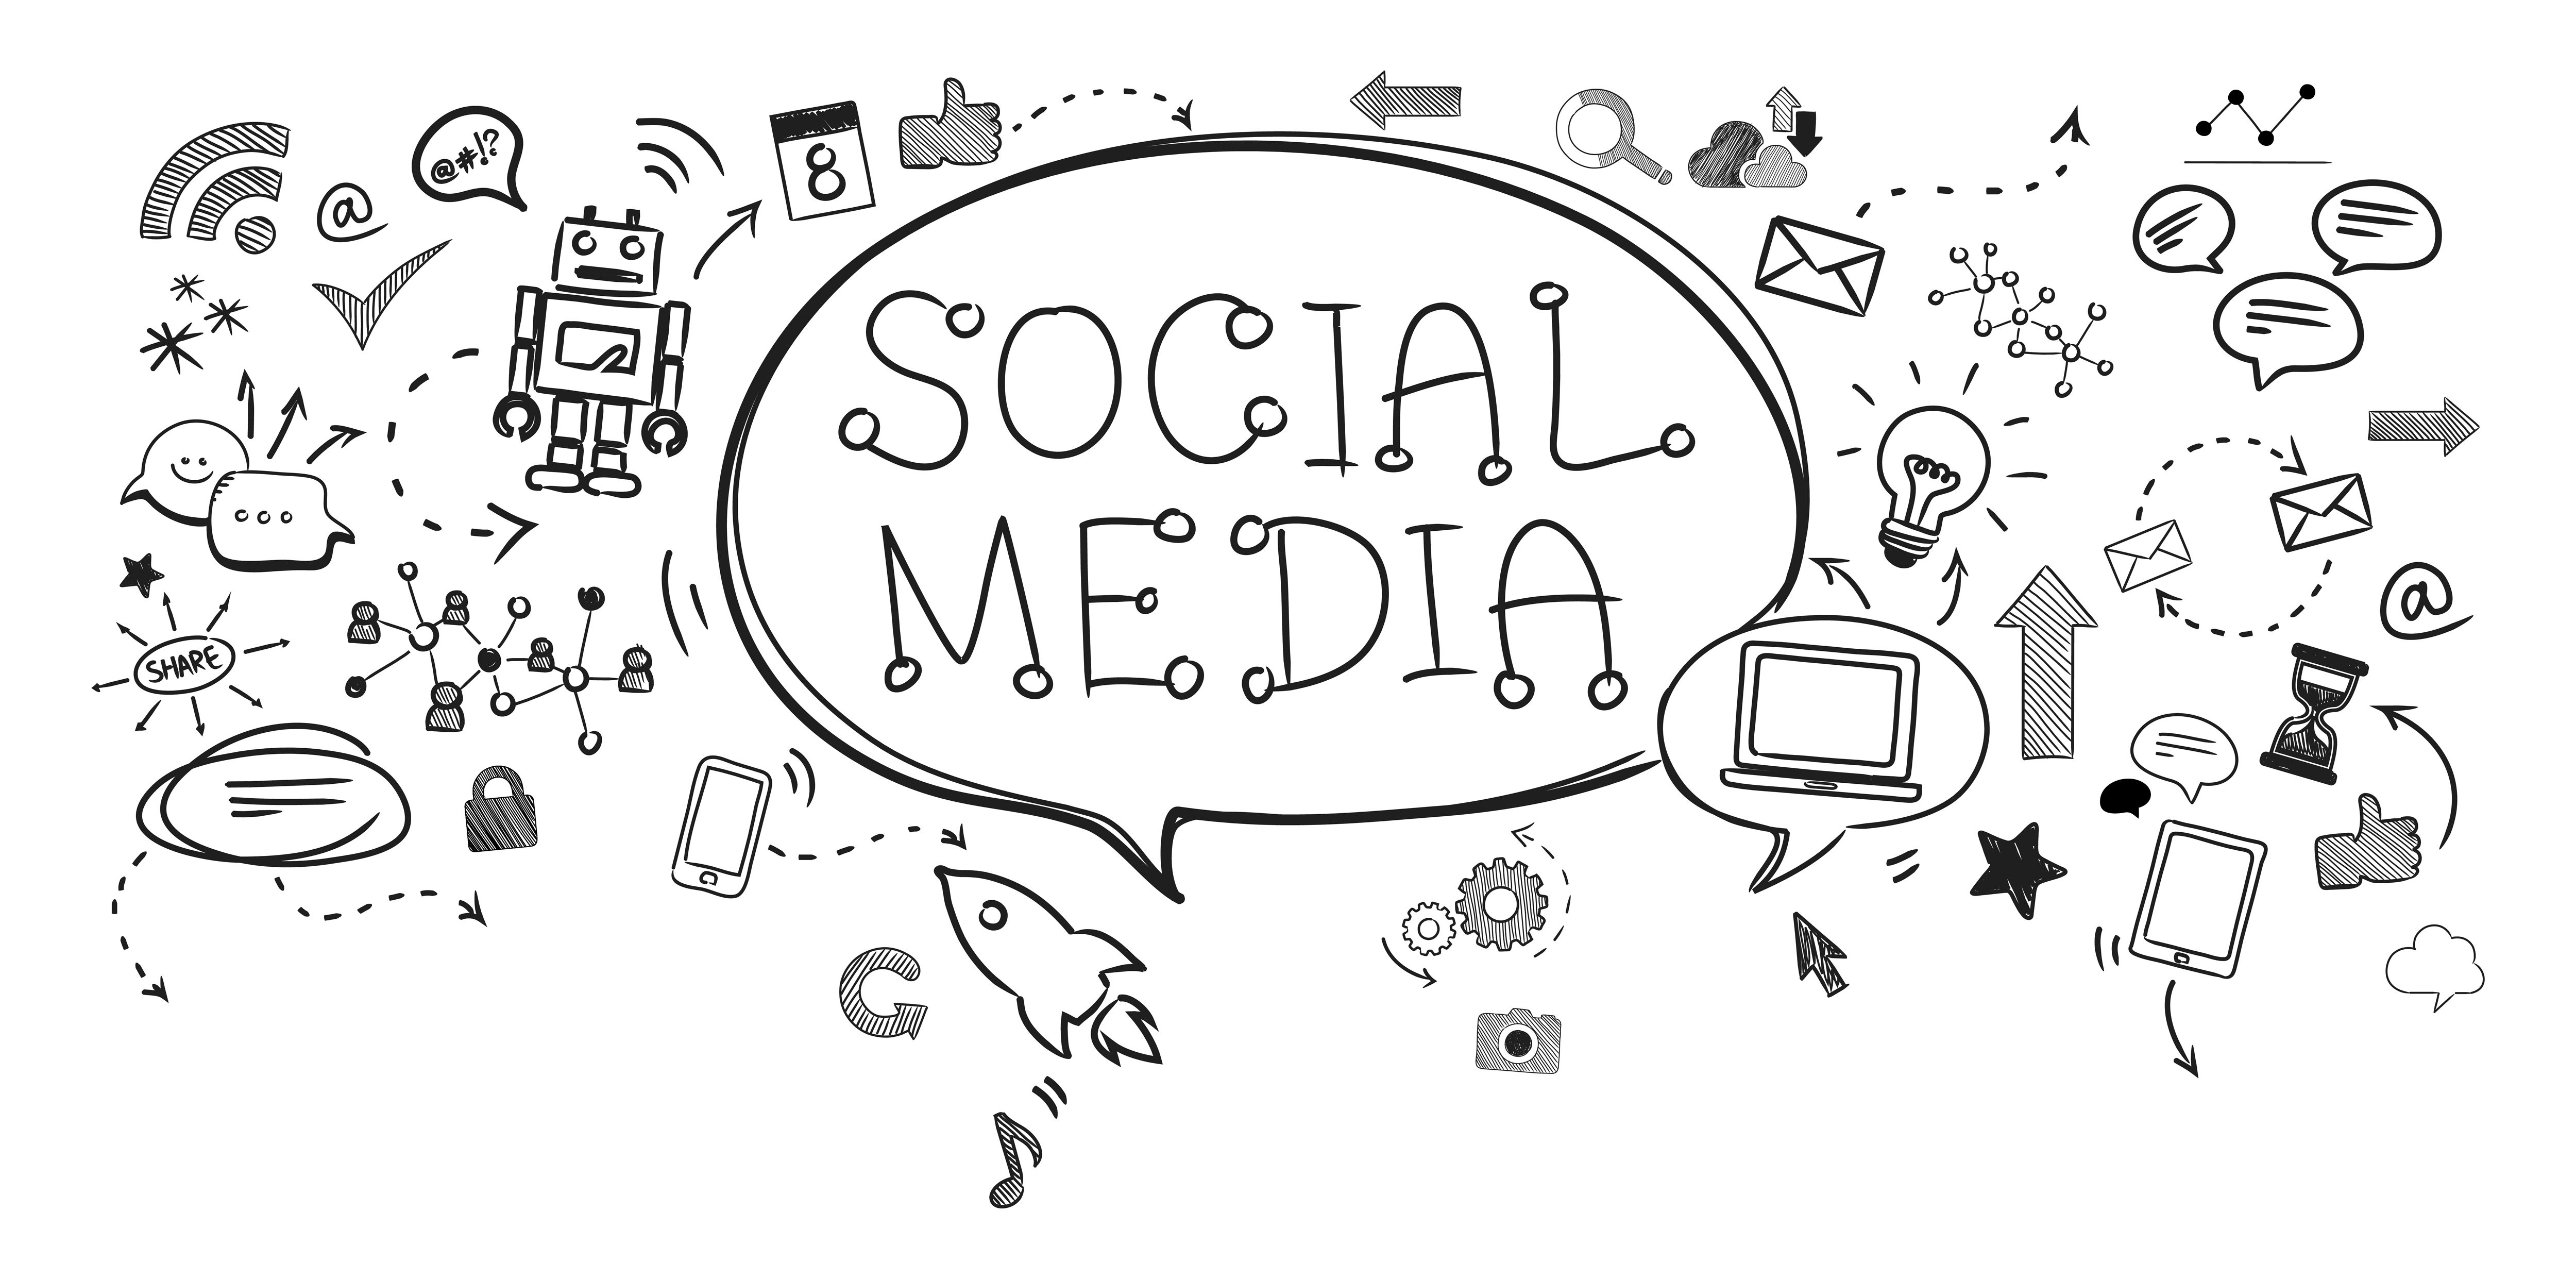 Looking for Top Social Media Marketing Companies in Pretoria?